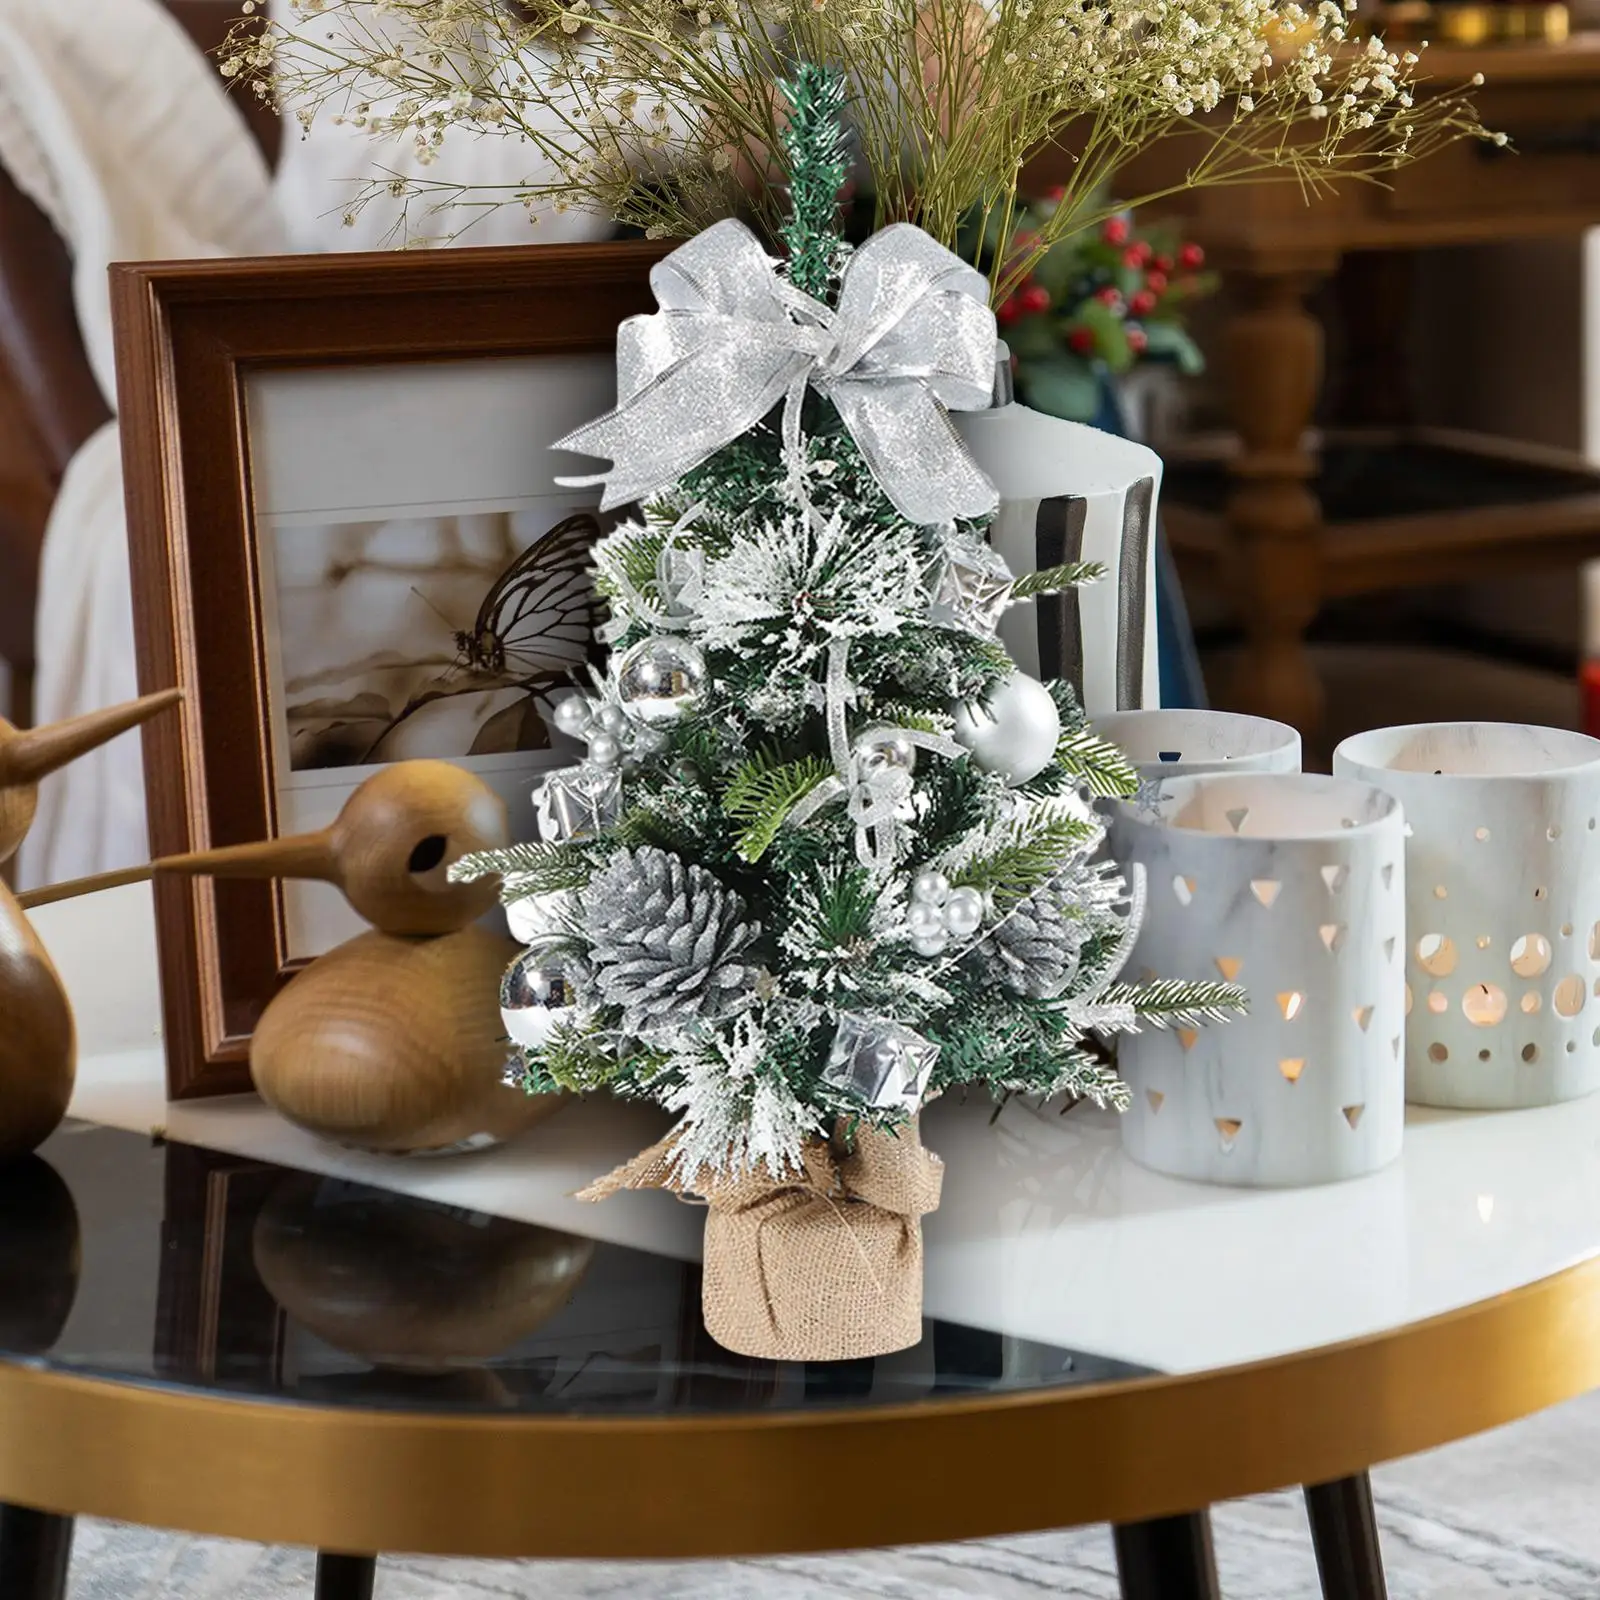 Table Christmas Tree Artificial Mini Christmas Tree for Shelf Holiday Office